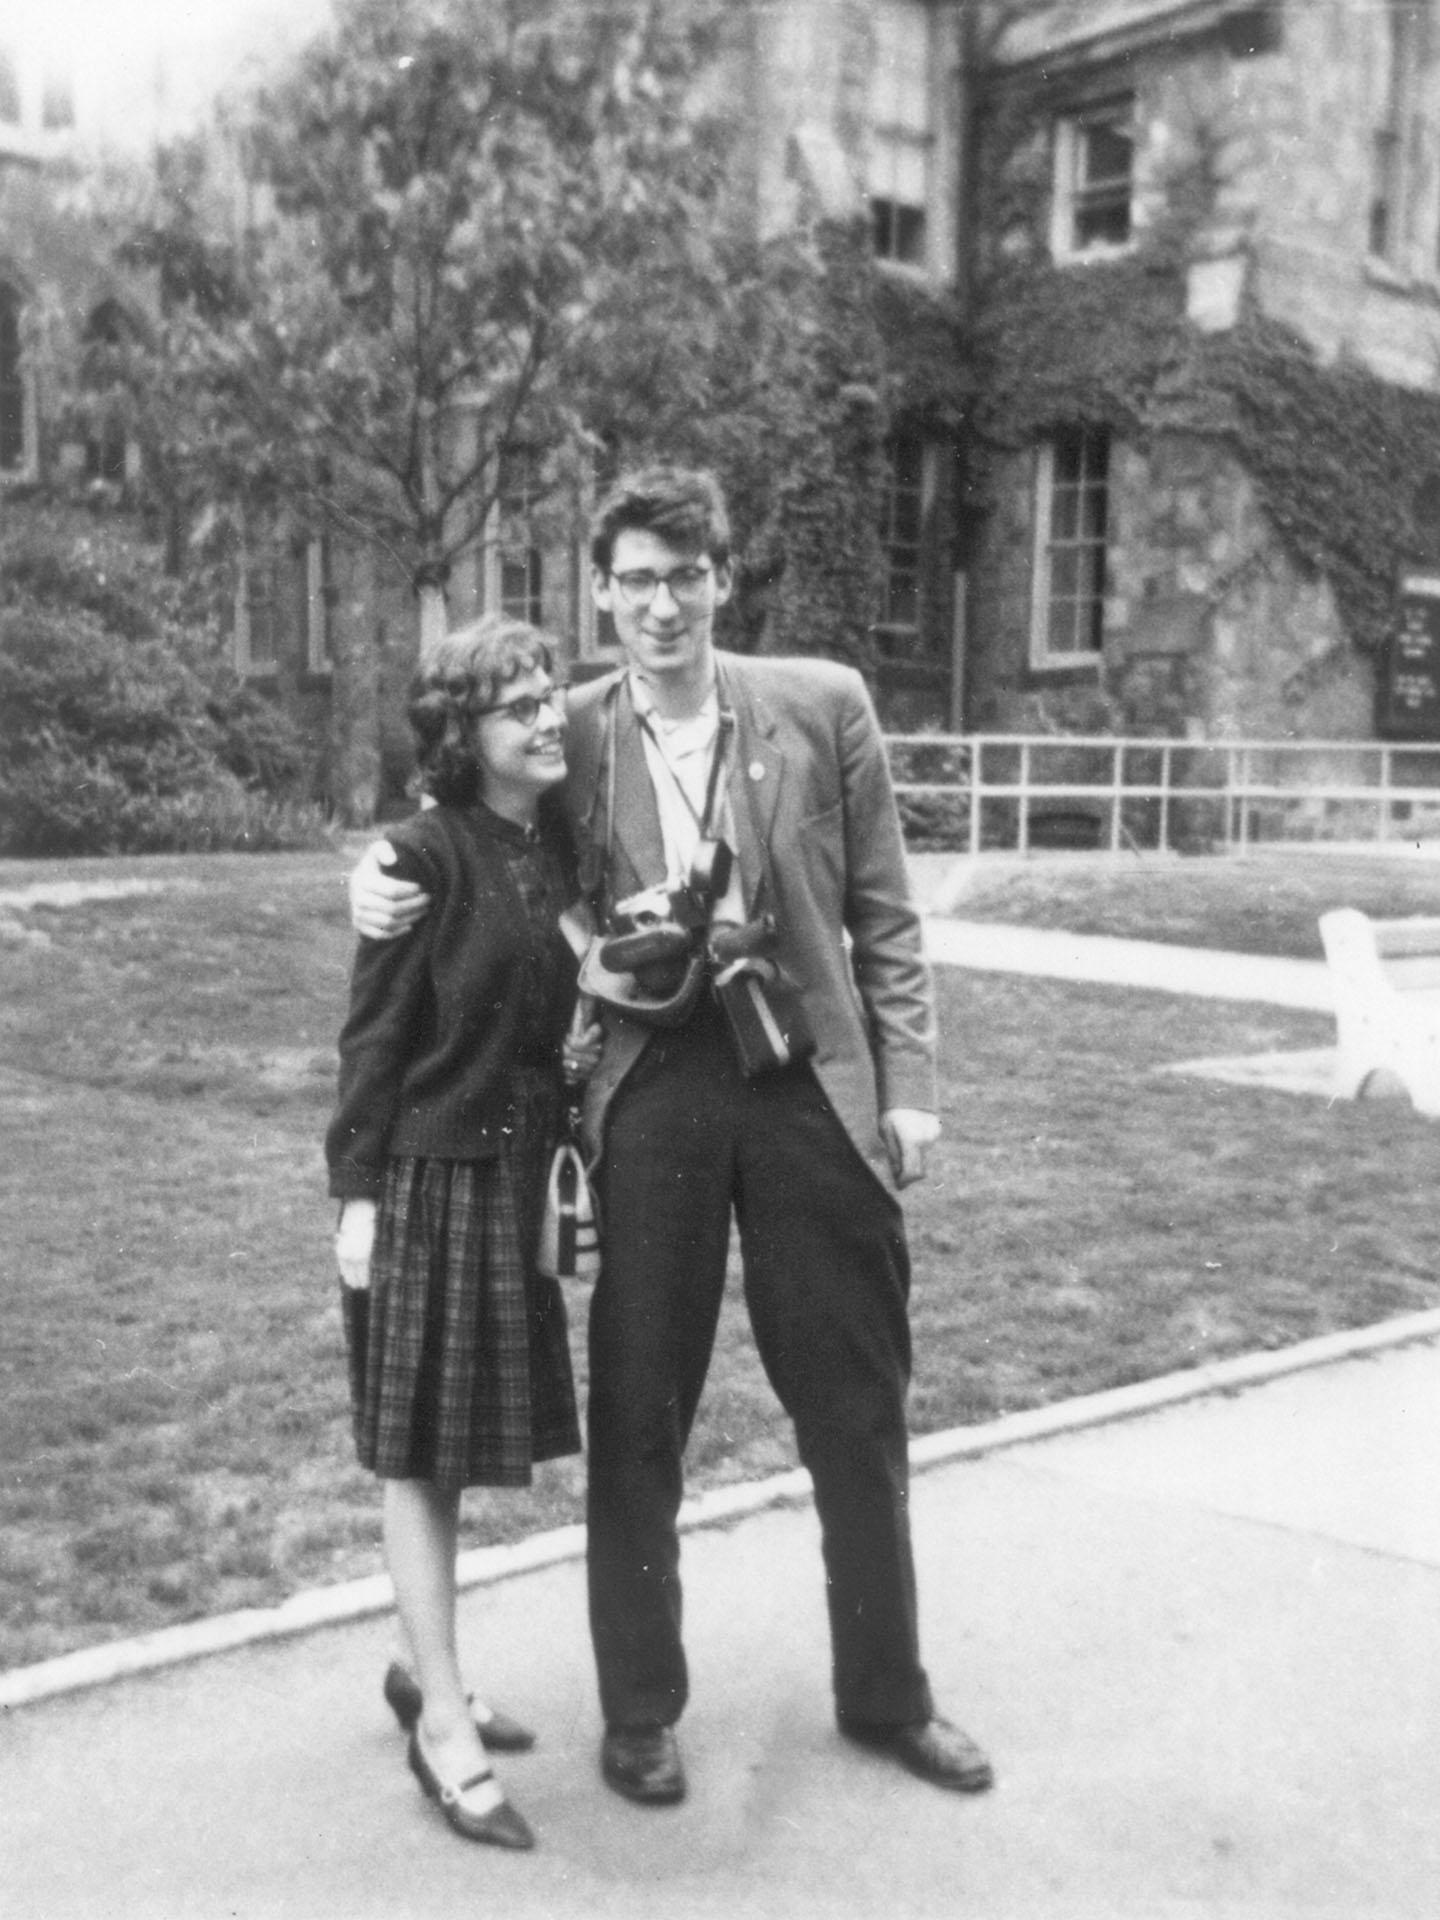 John and Arlene Jordan during graduation week, April 1963. They were married in February 1964.